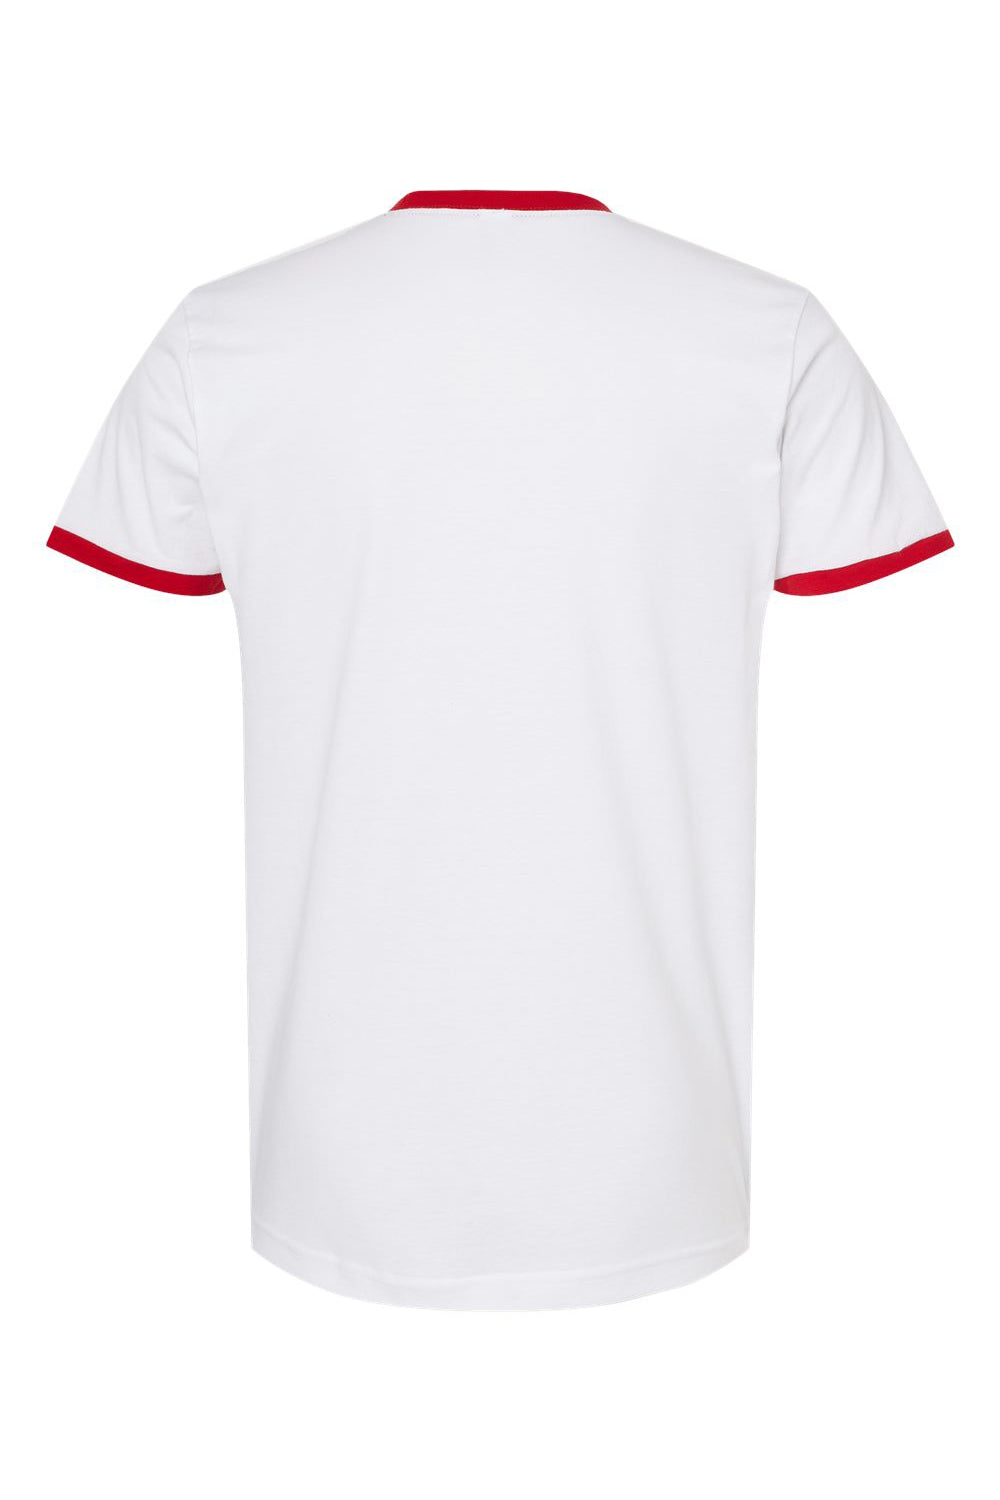 Tultex 246 Mens Fine Jersey Ringer Short Sleeve Crewneck T-Shirt White/Red Flat Back